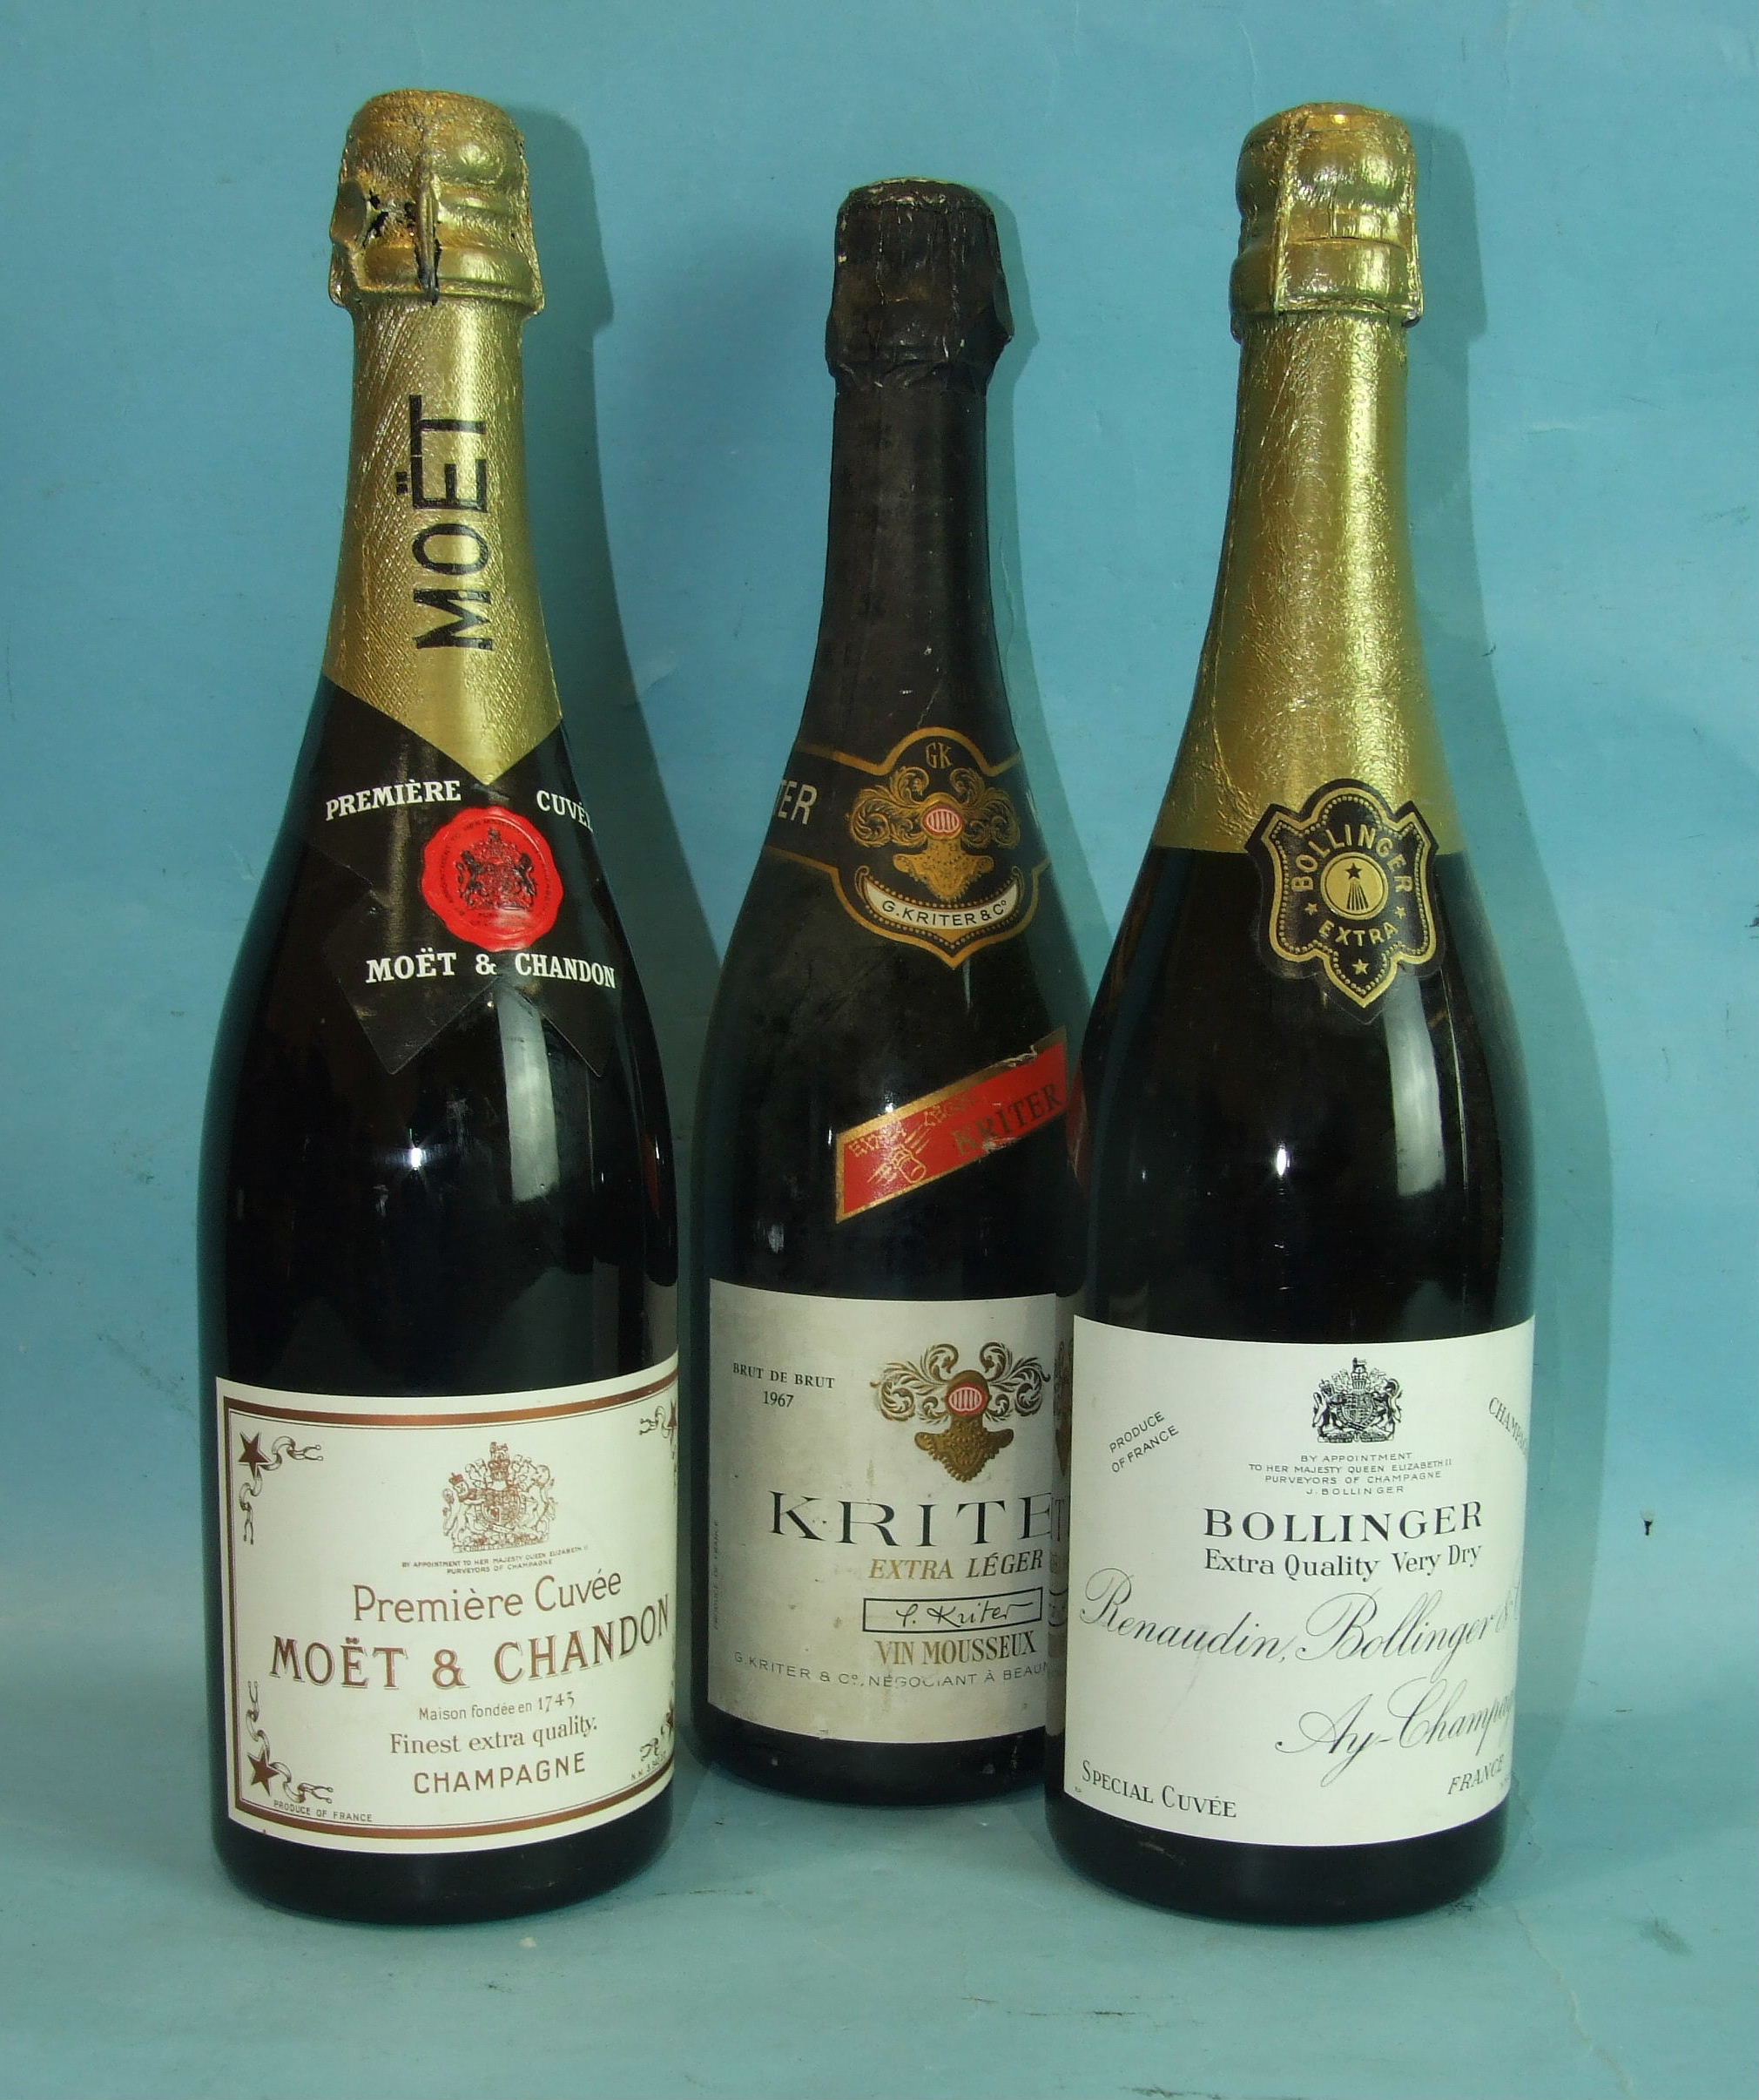 Bollinger Extra Quality Very Dry Special Cuvée Champagne, one bottle, Moët et Chandon Premiere Cuvée